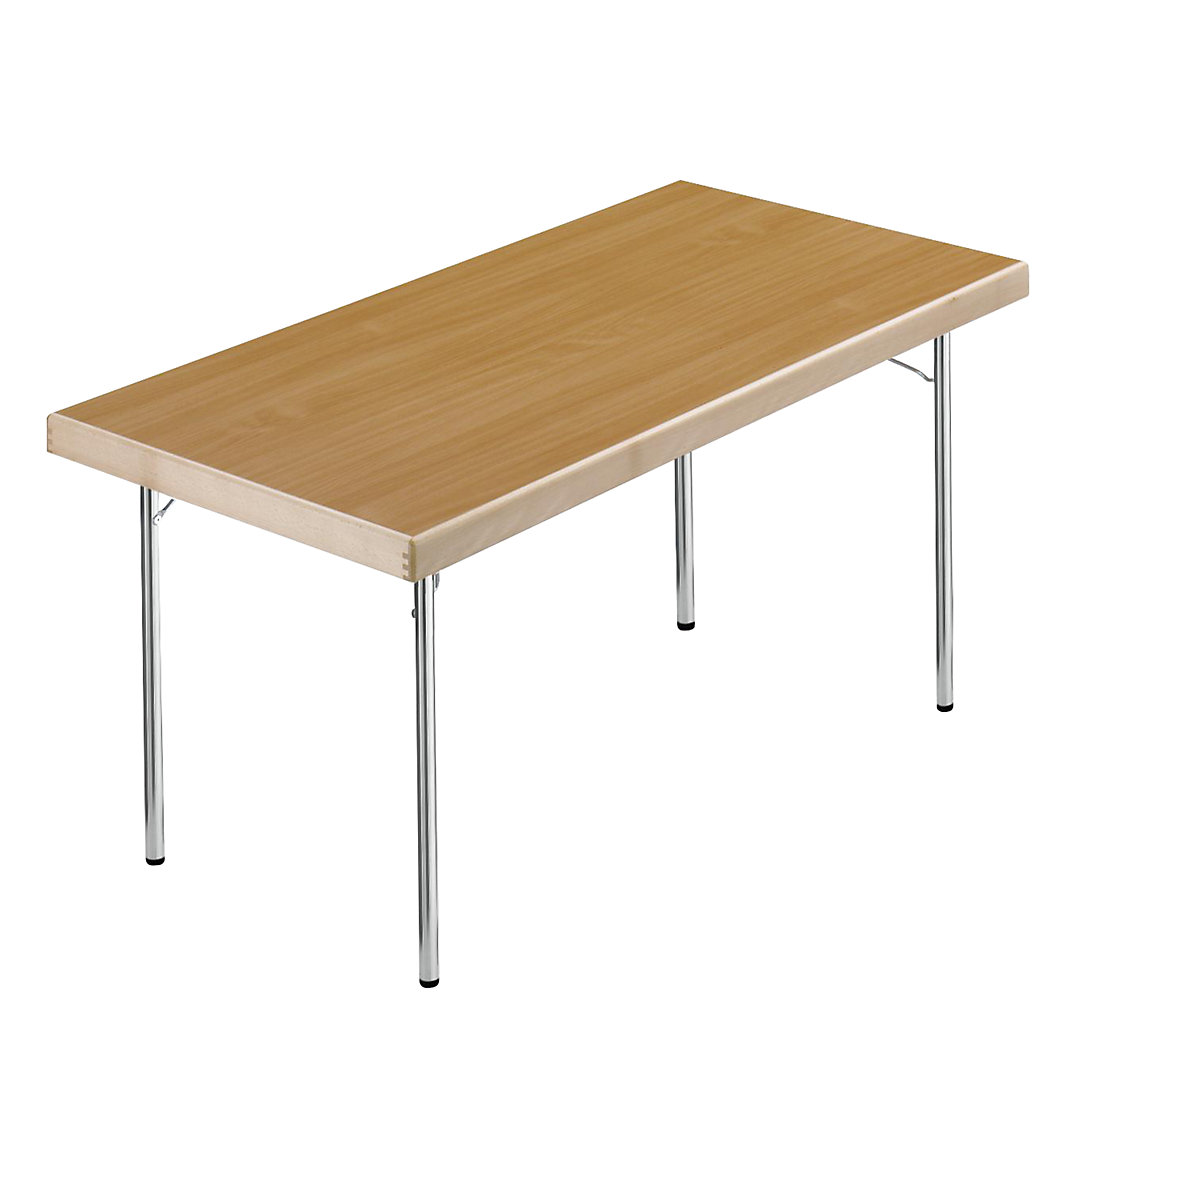 Sklápací stôl, podstavec so 4 nohami, 1500 x 800 mm, podstavec pochrómovaný, doska vzor buk-9